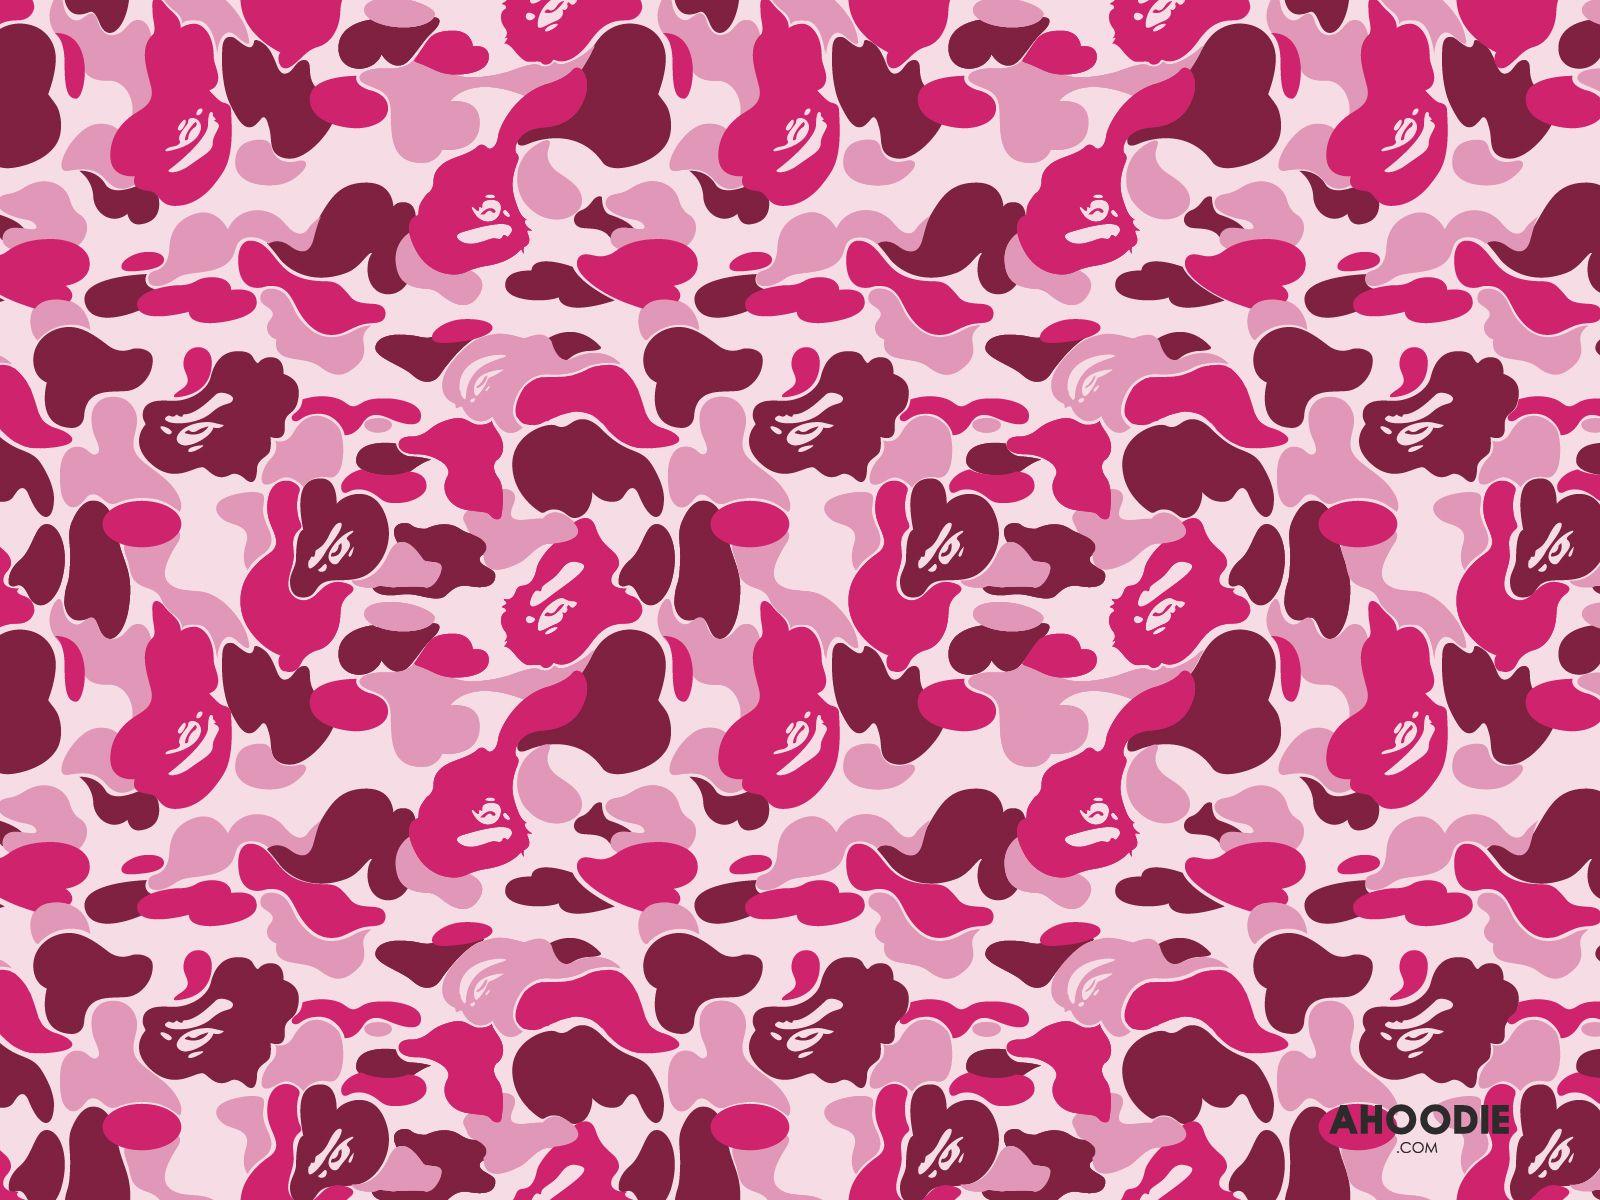 BAPE Pink Camo Logo - Bape Wallpapers